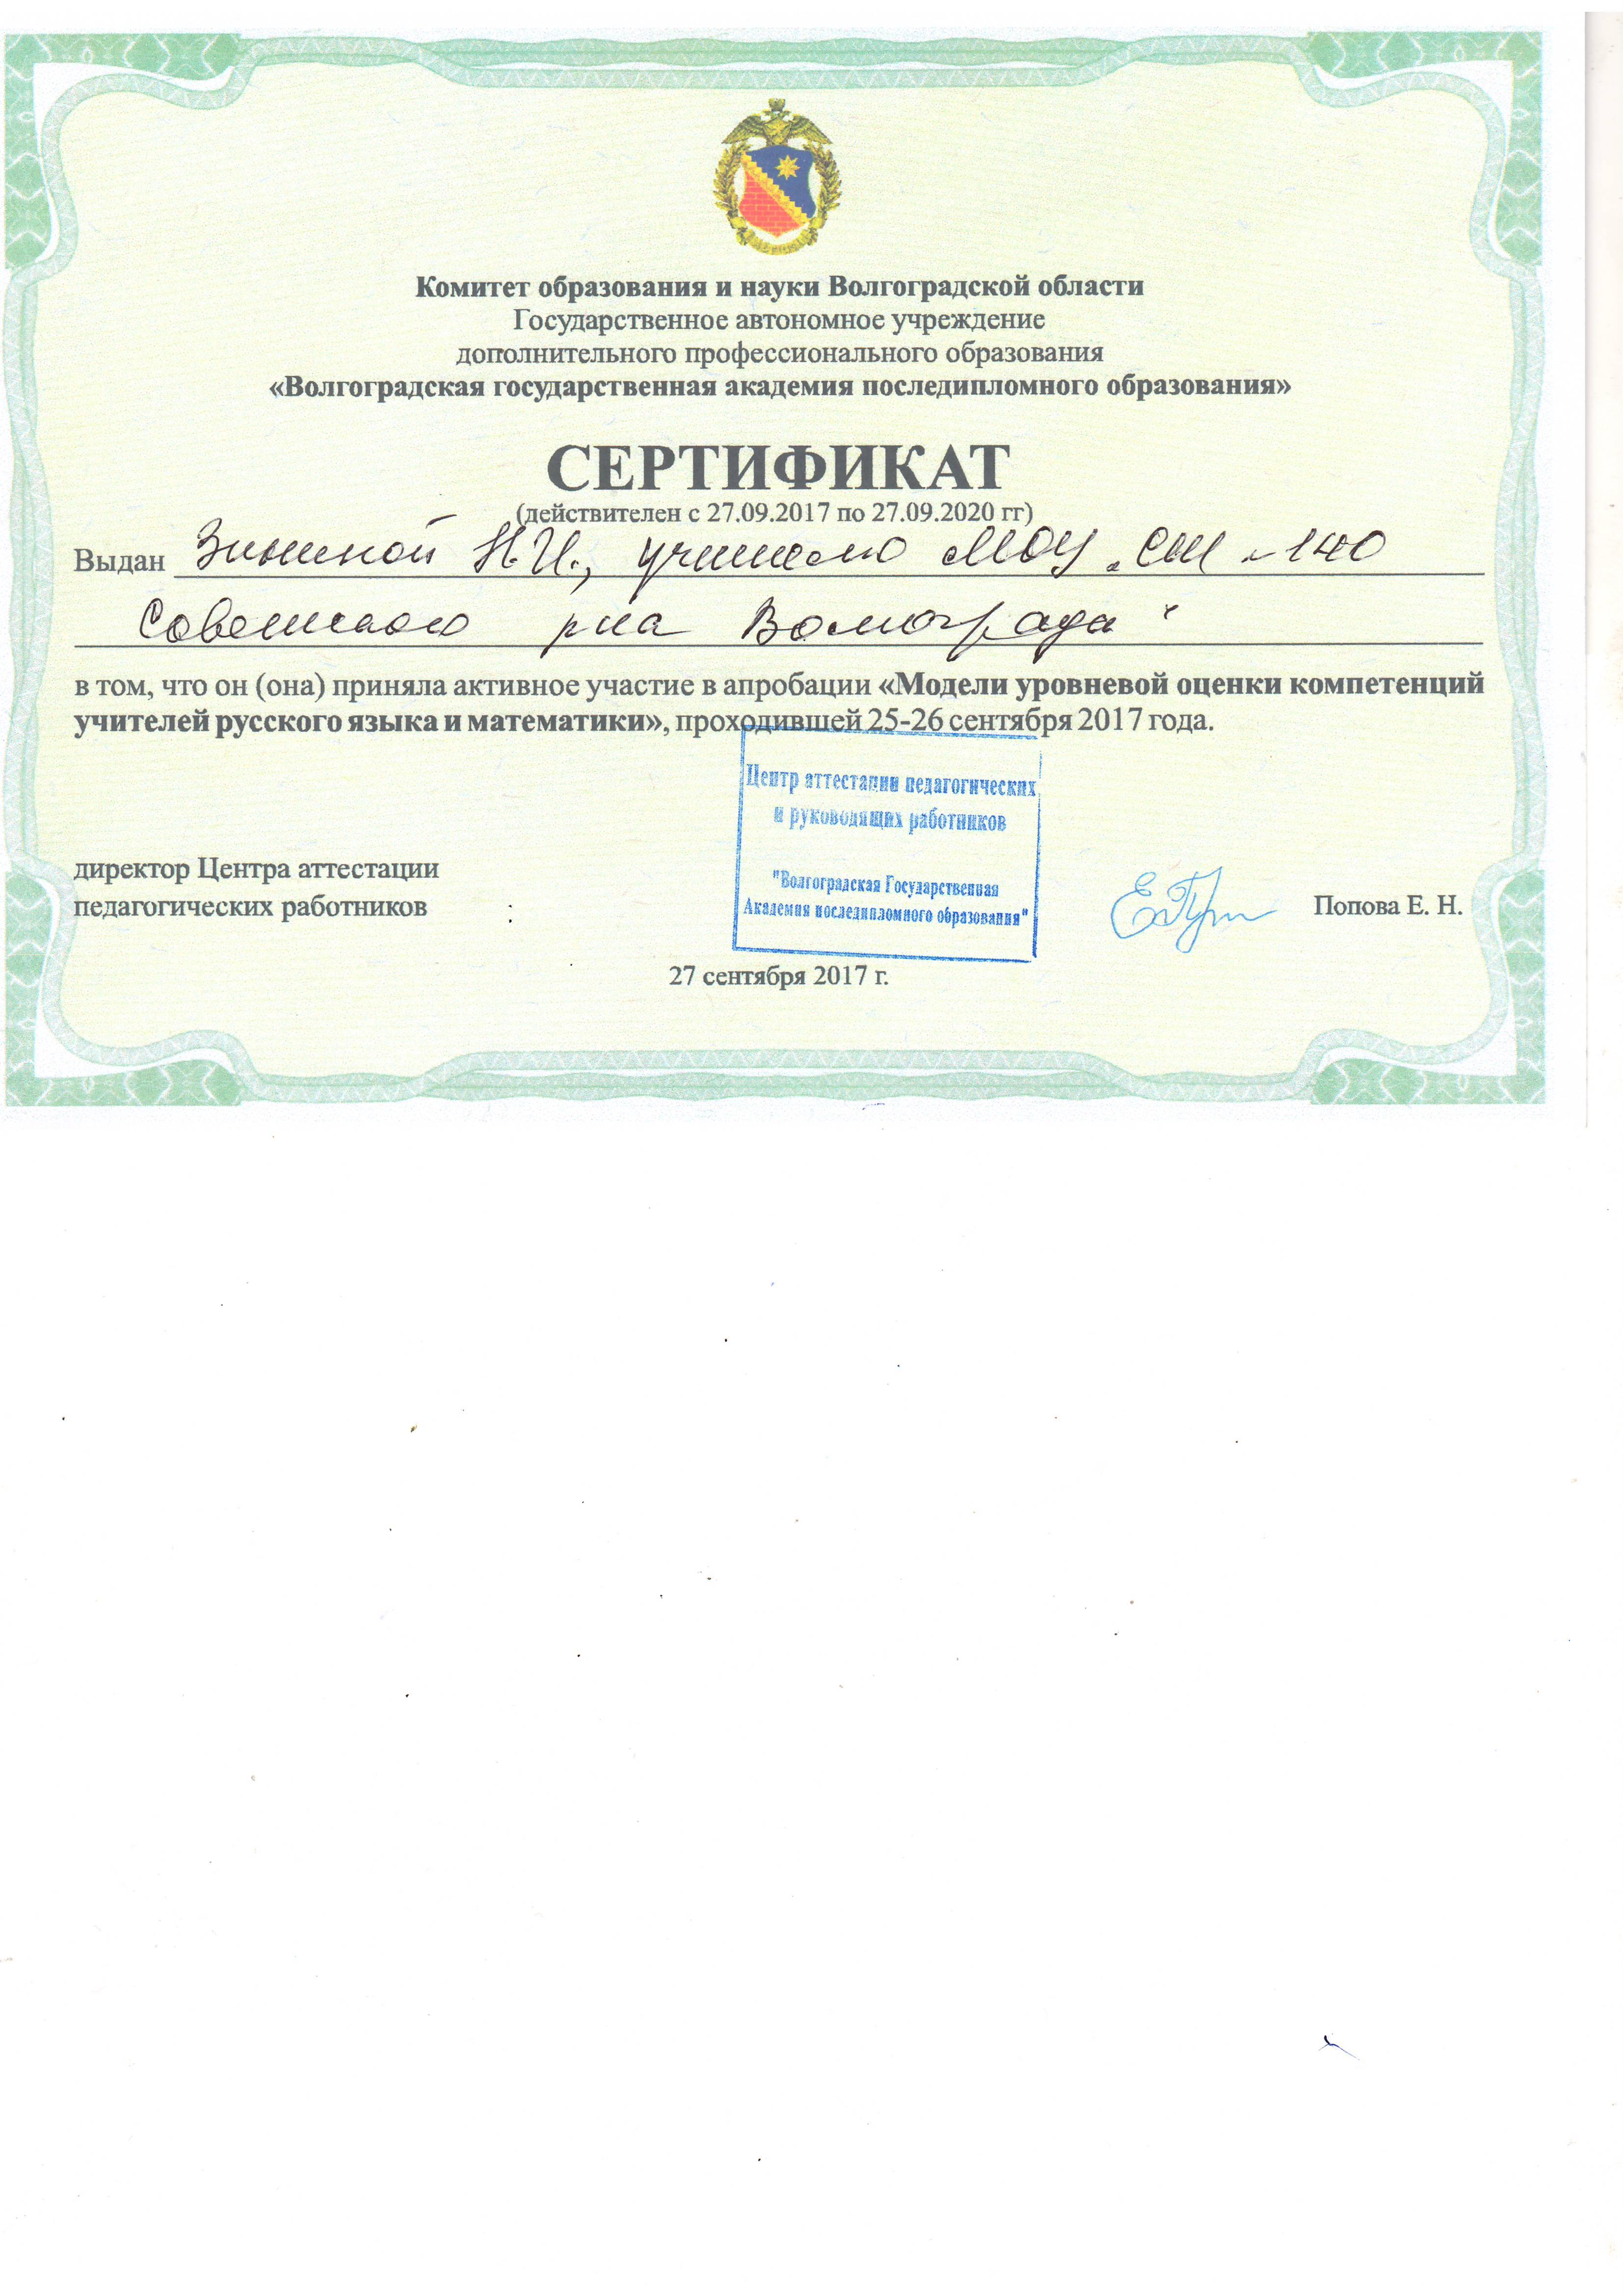 Сертификат0001.JPG